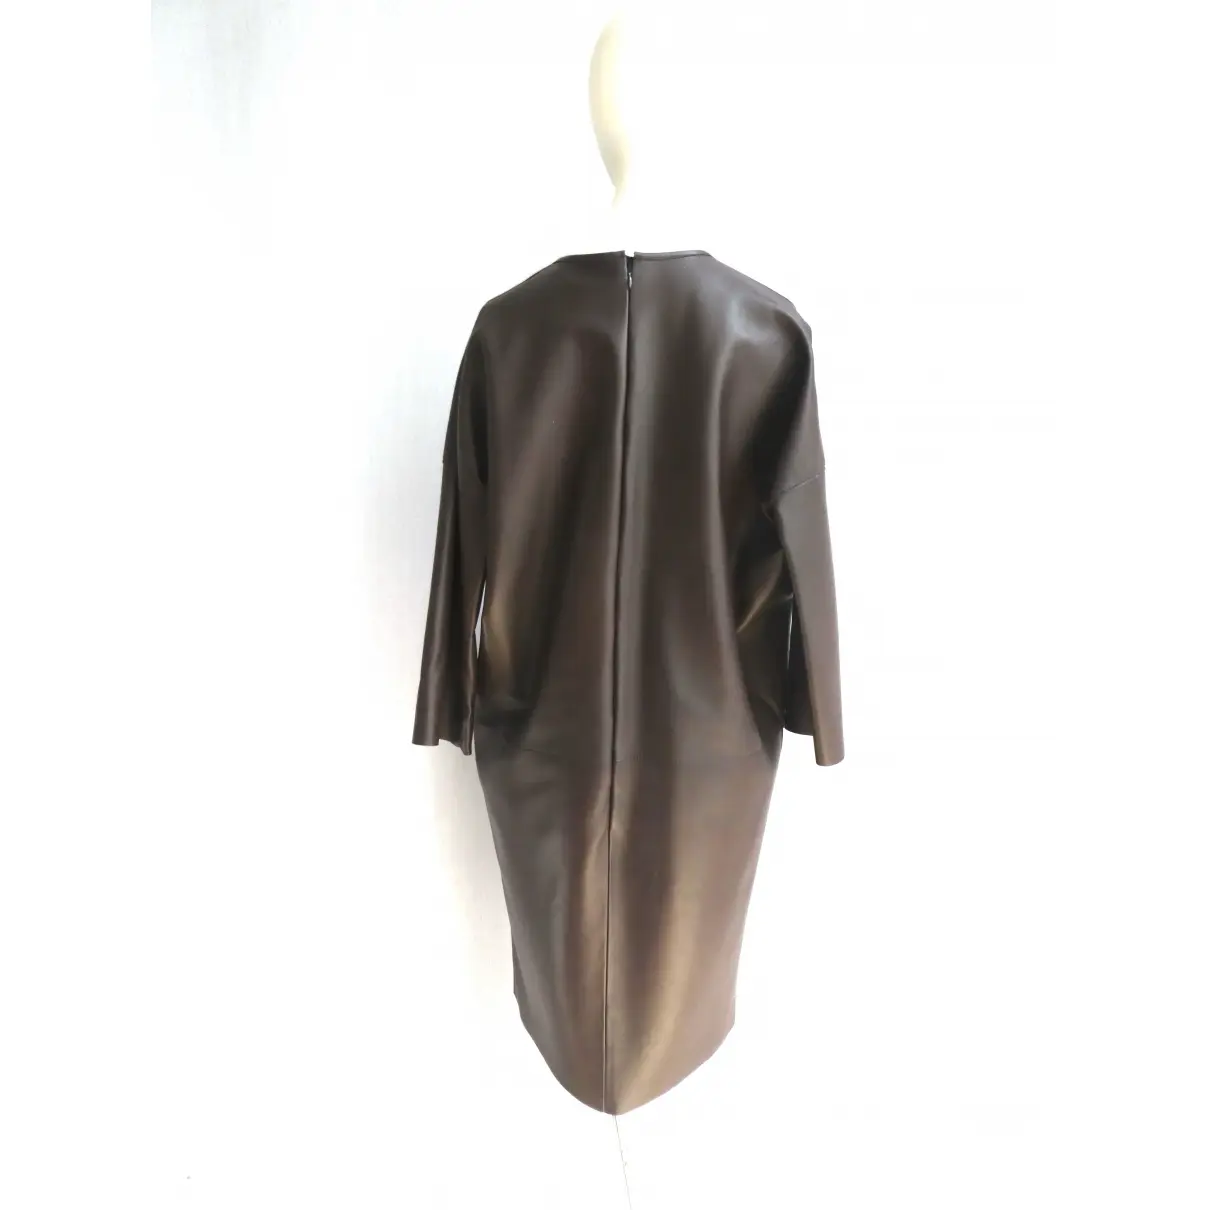 Buy Gembalies Leather dress online